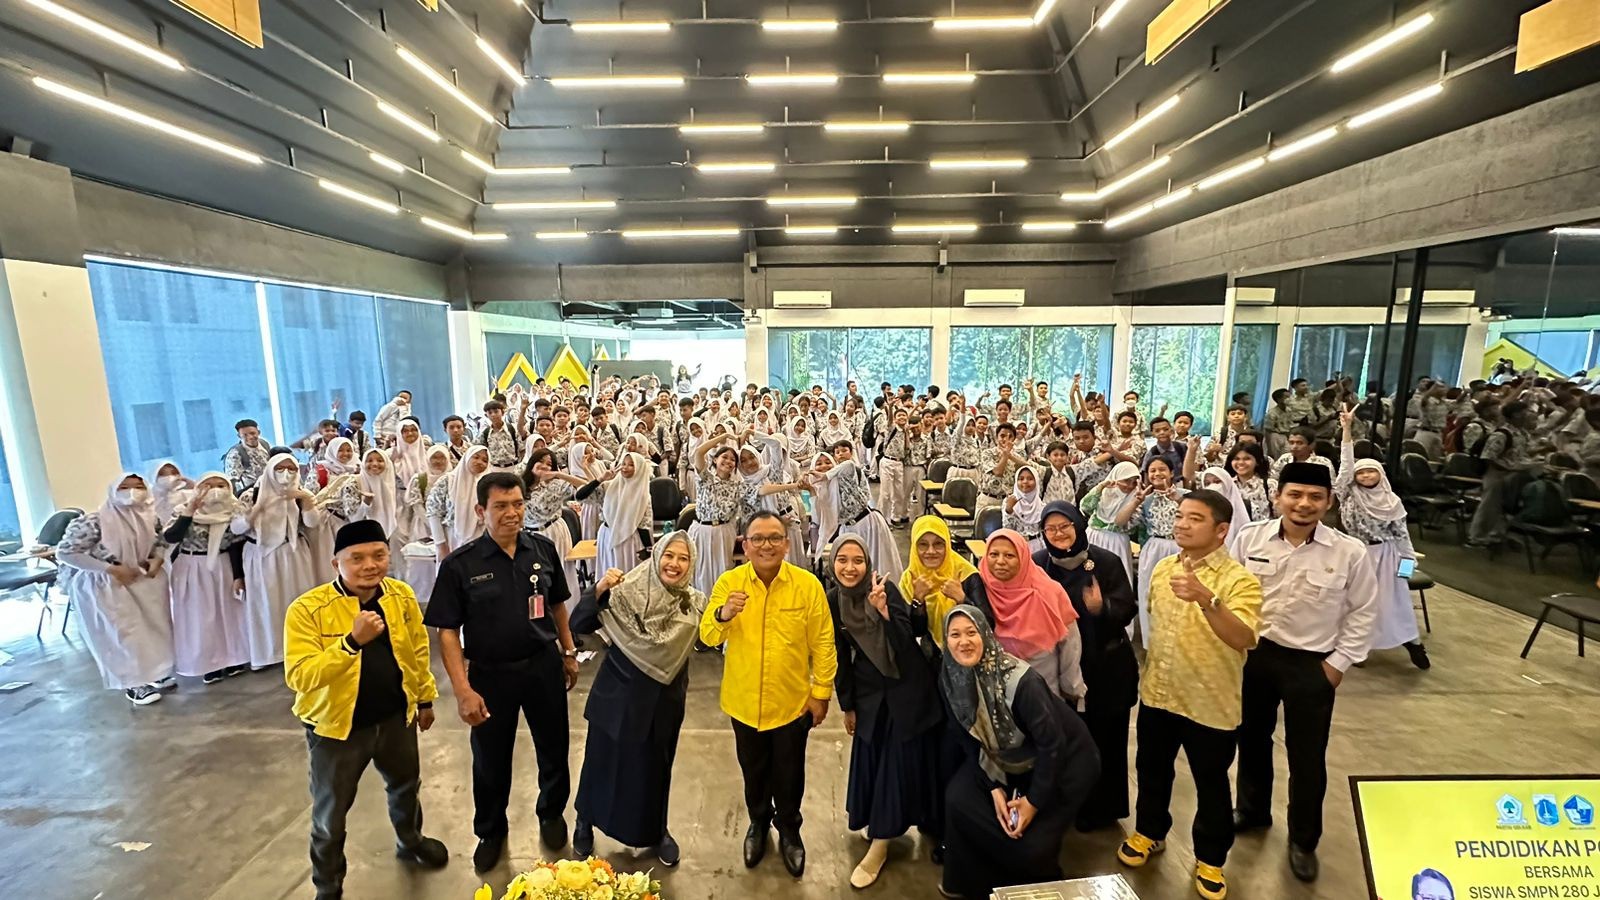 Golkar DKI Jakarta Gelar Pendidikan Politik Bersama Siswa SMPN 280